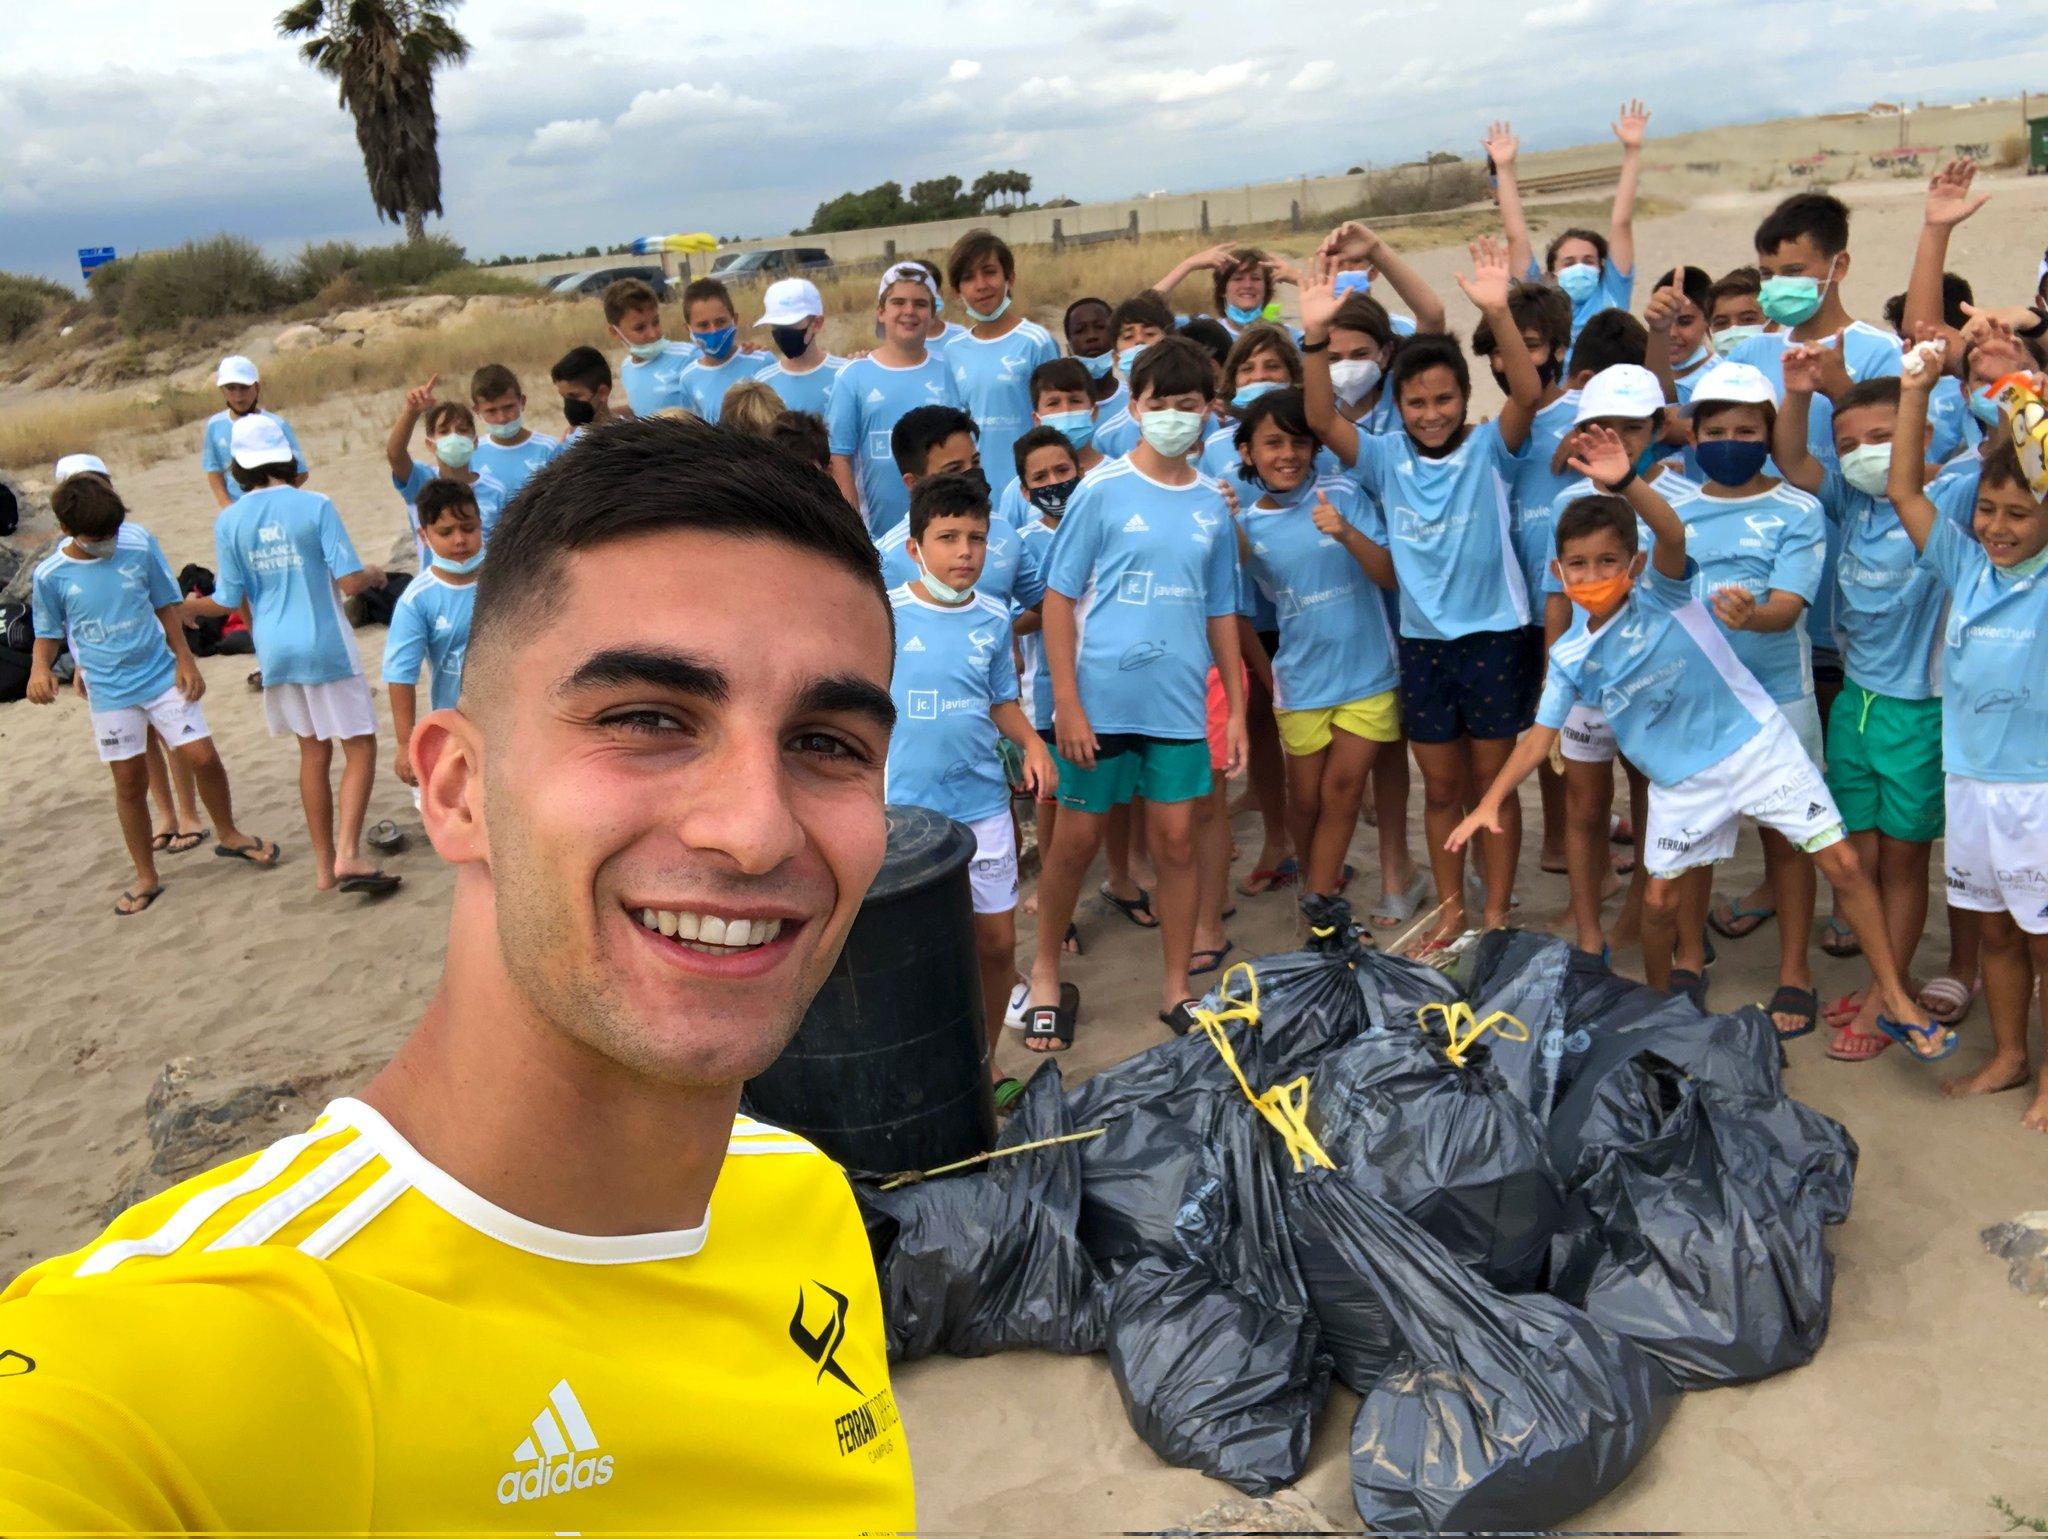 Osim fudbala i zabave, španski fudbaler podstiče djecu da paze na okoliš